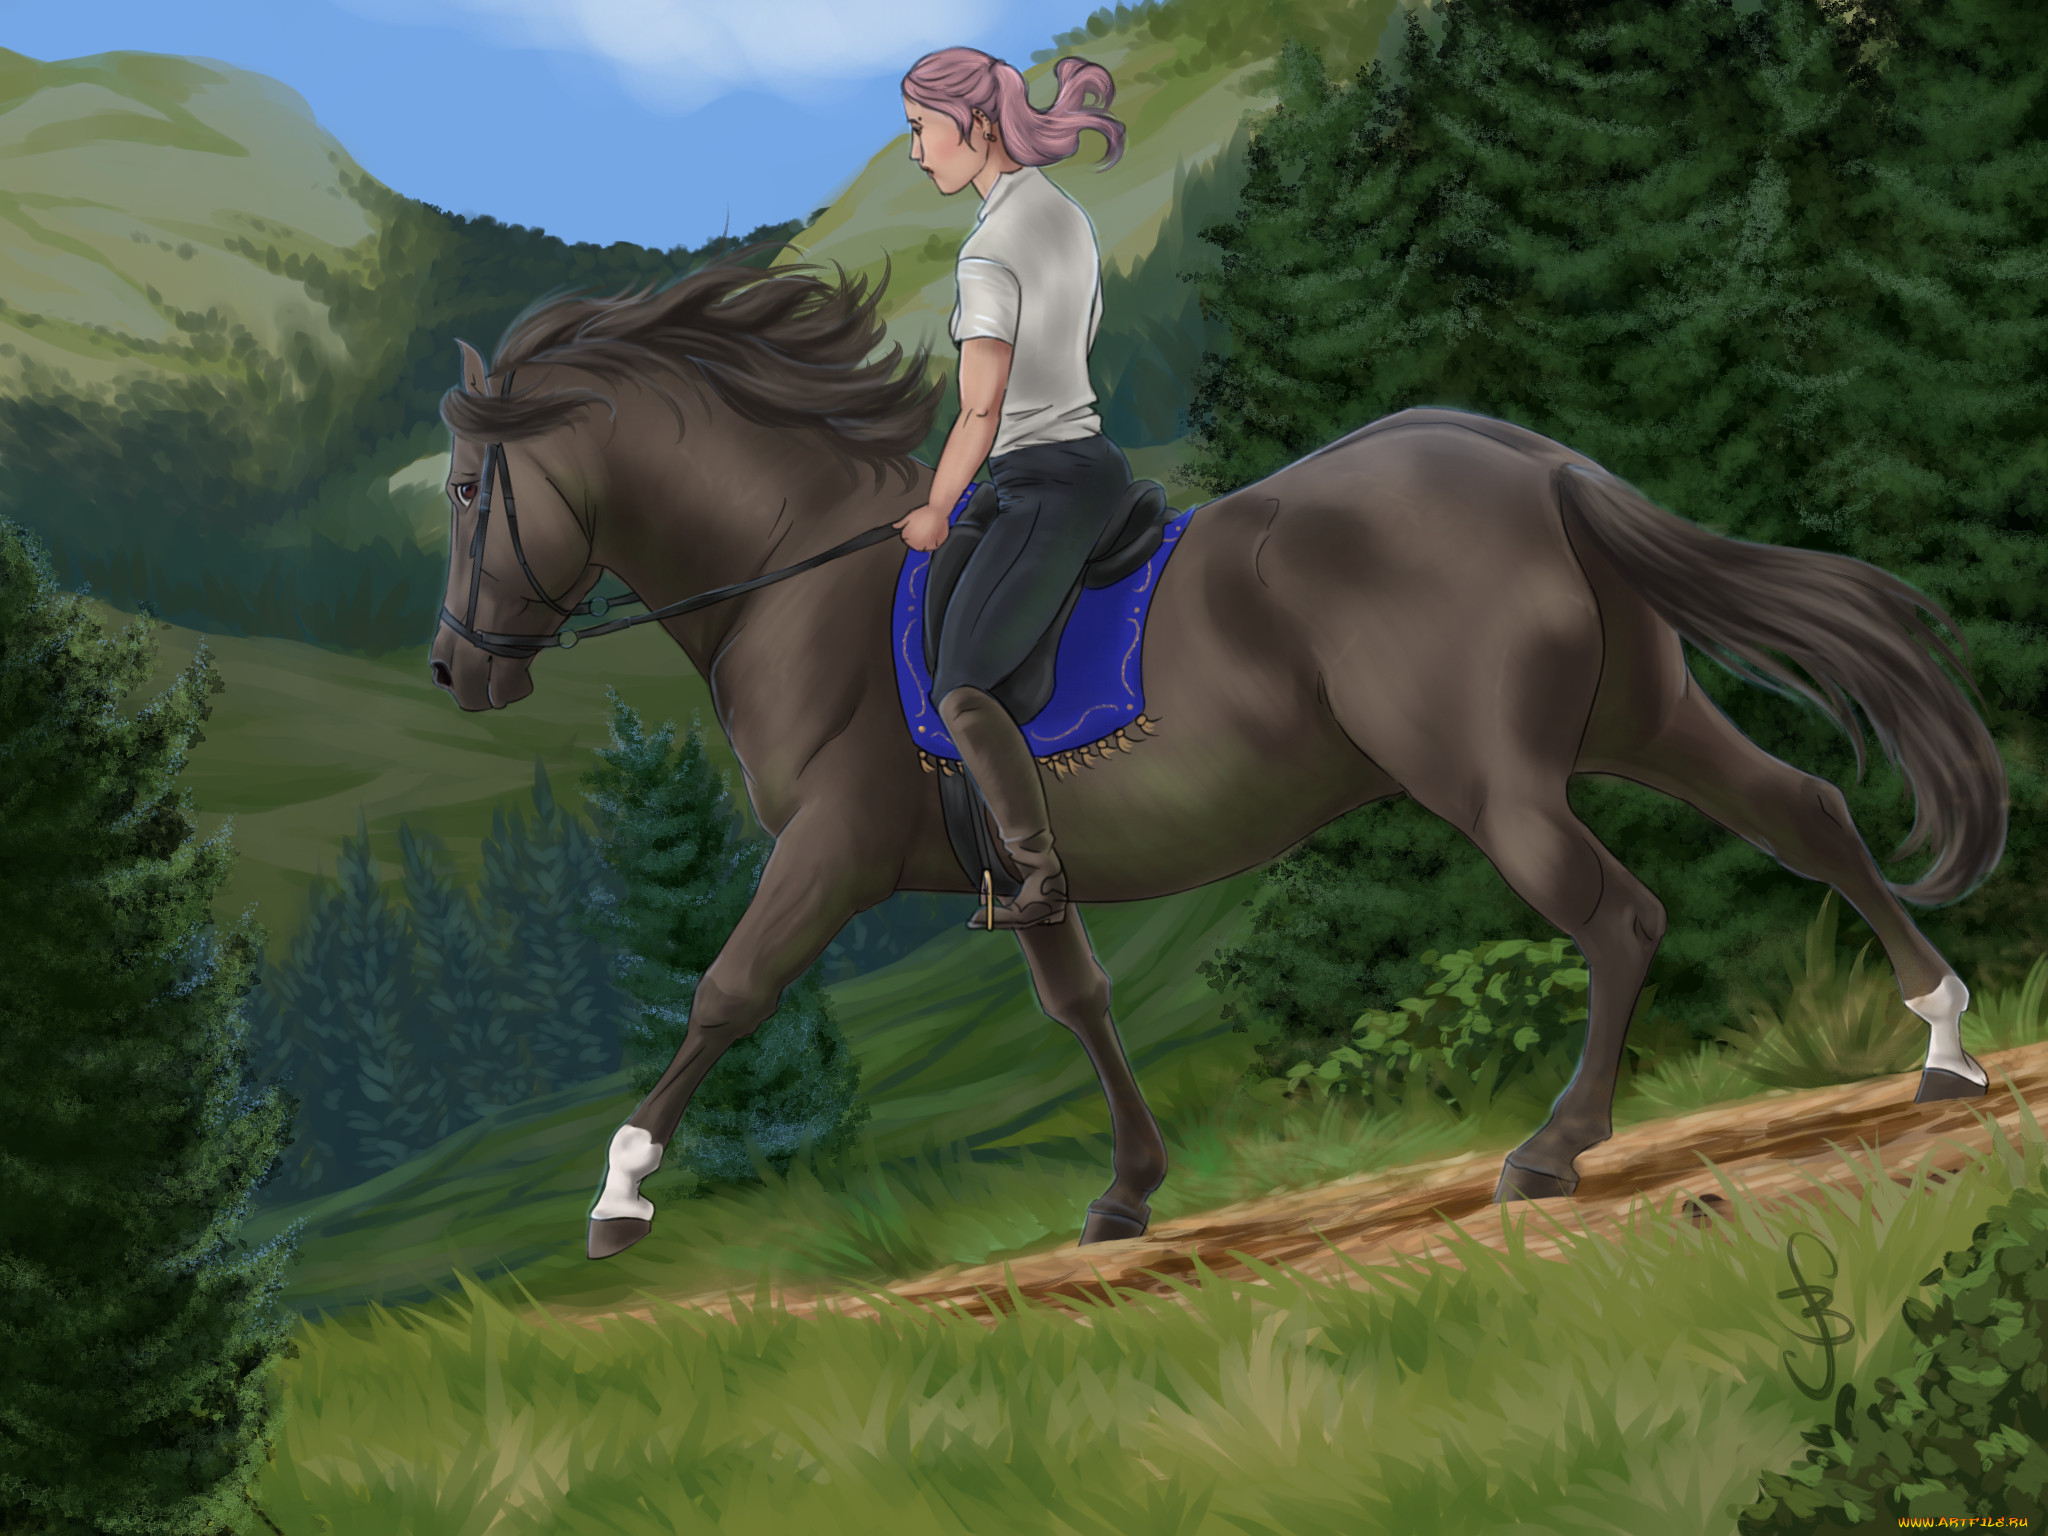 Транс наездник. Лошади в горах. Девочка на лошади арт.